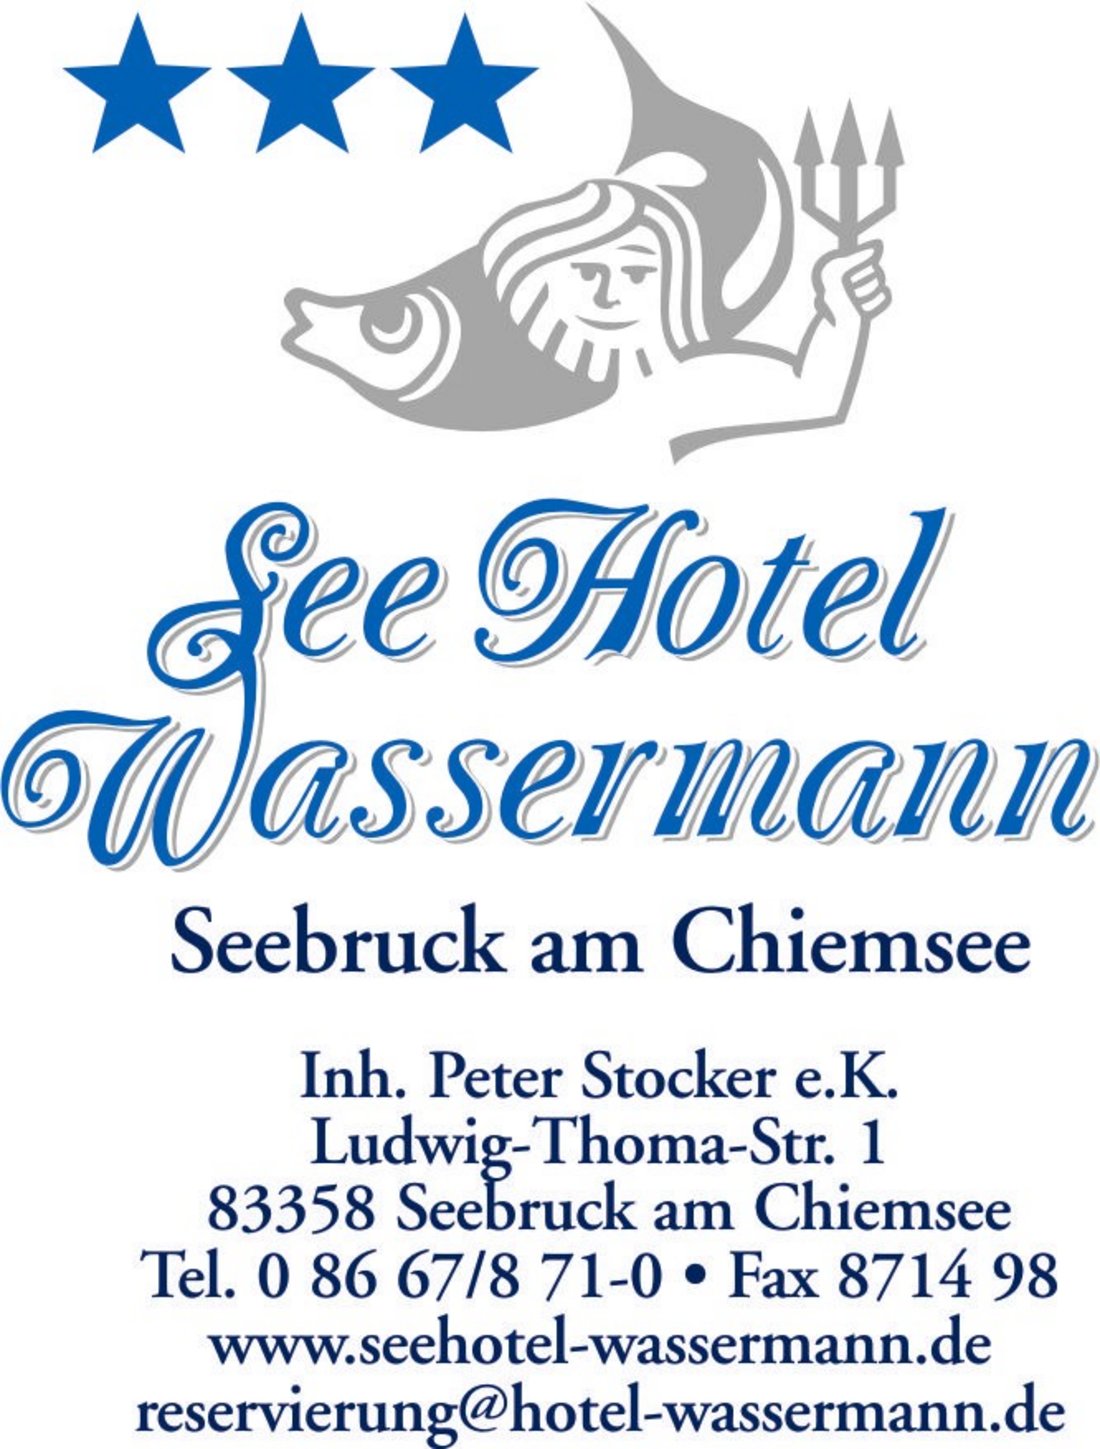 SeeHotel Wassermann - Inh. Peter Stocker e.K.